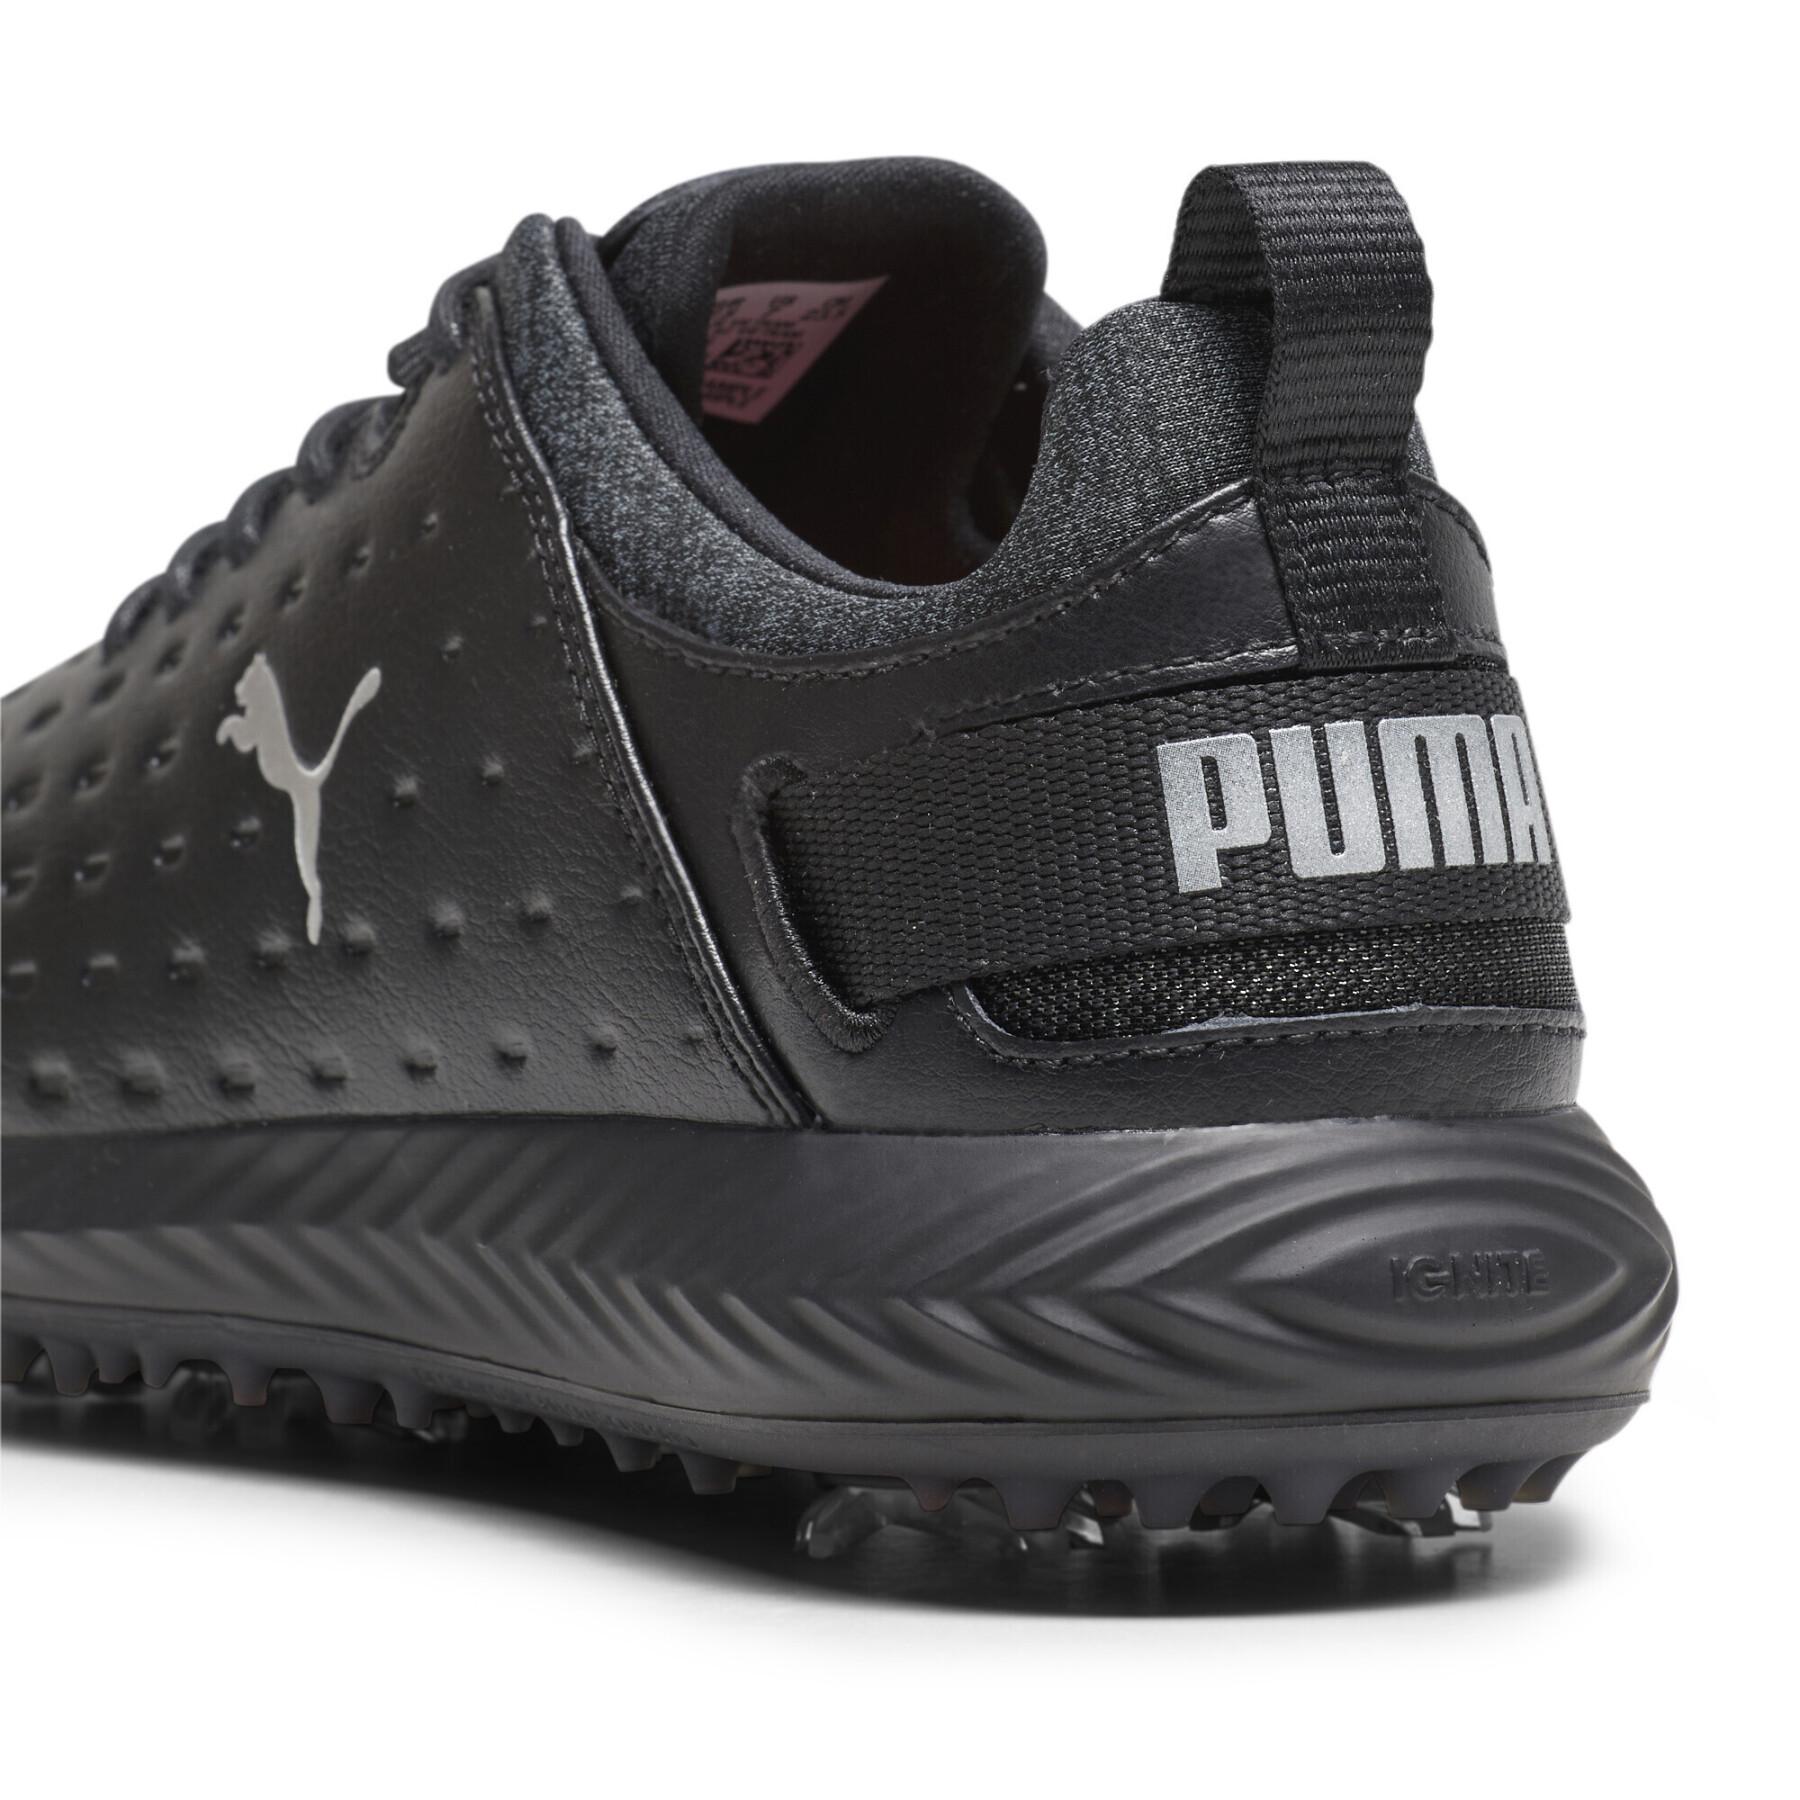 Women's golf shoes Puma Ignite Blaze Pro